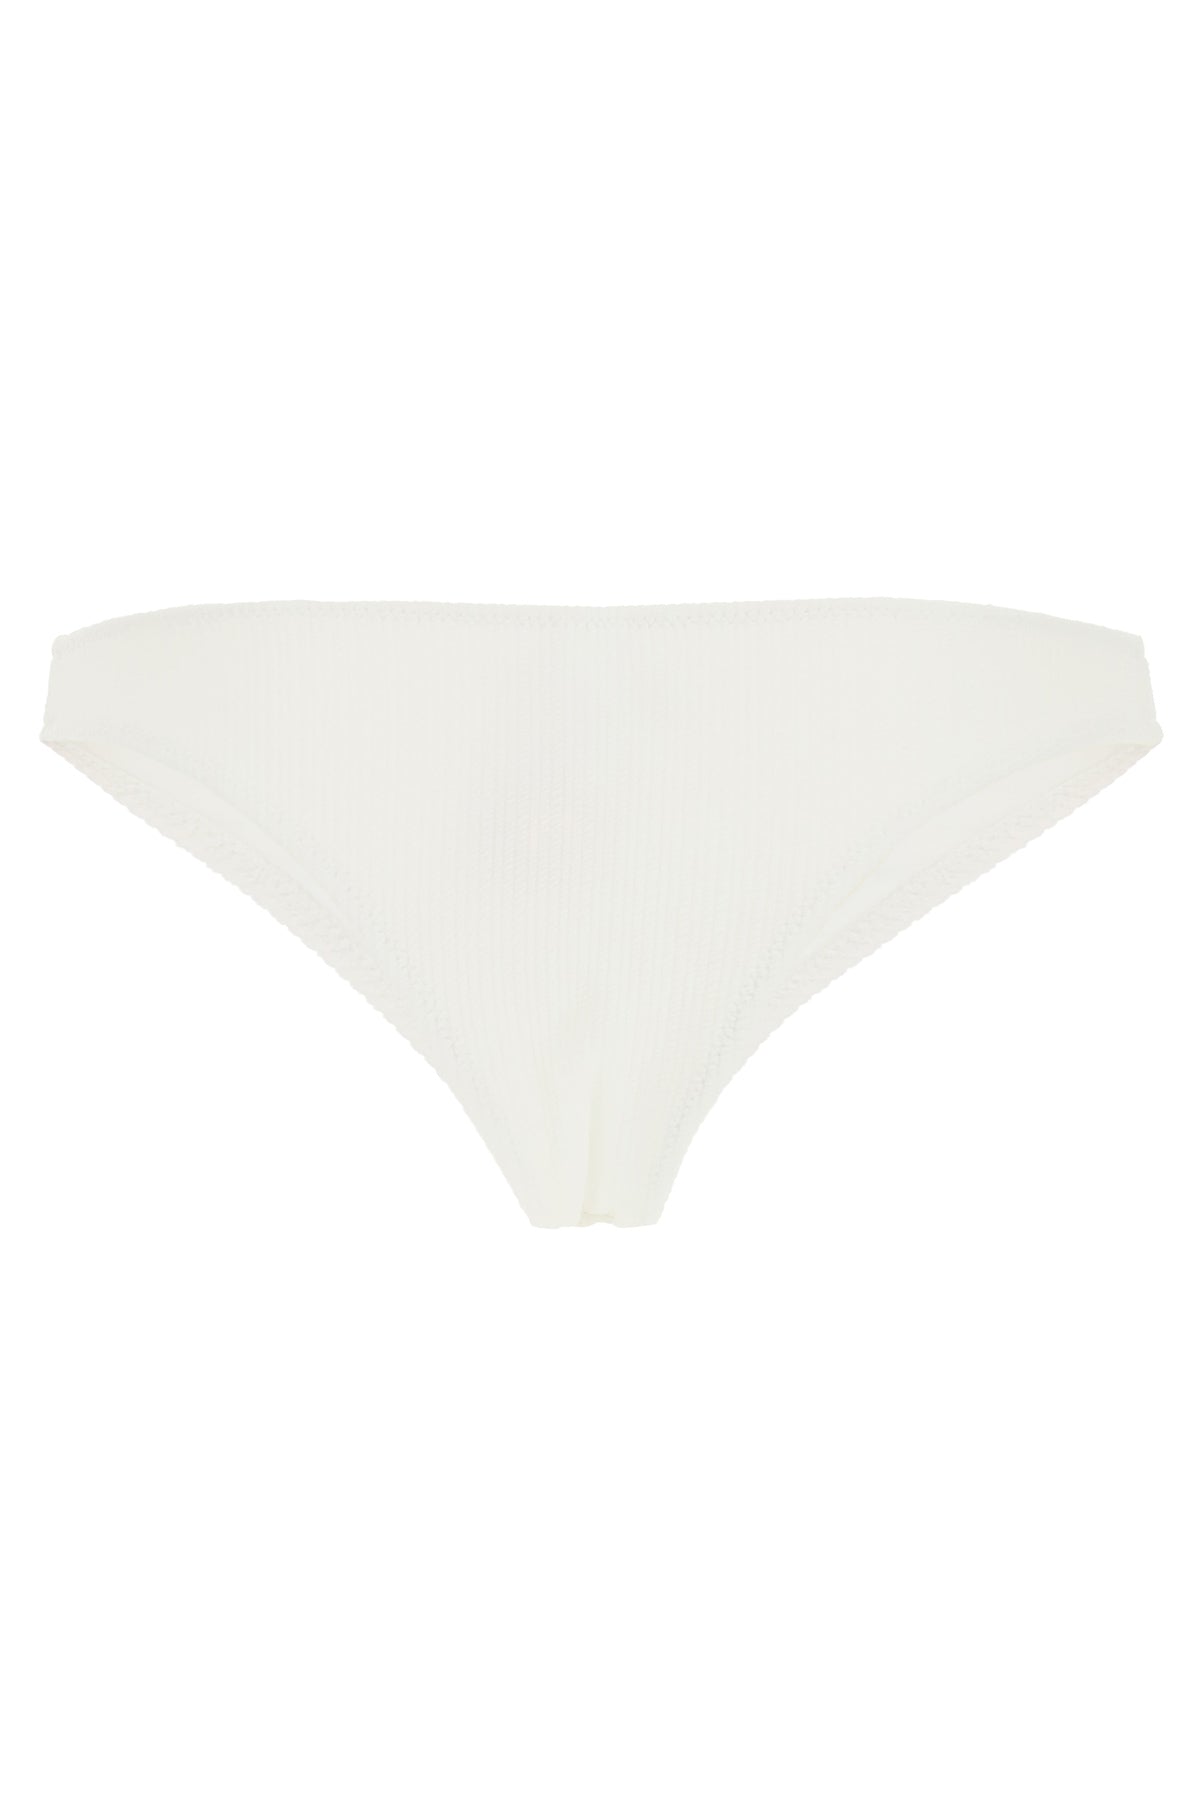 Tropic of c high-waisted bikini bottom-1